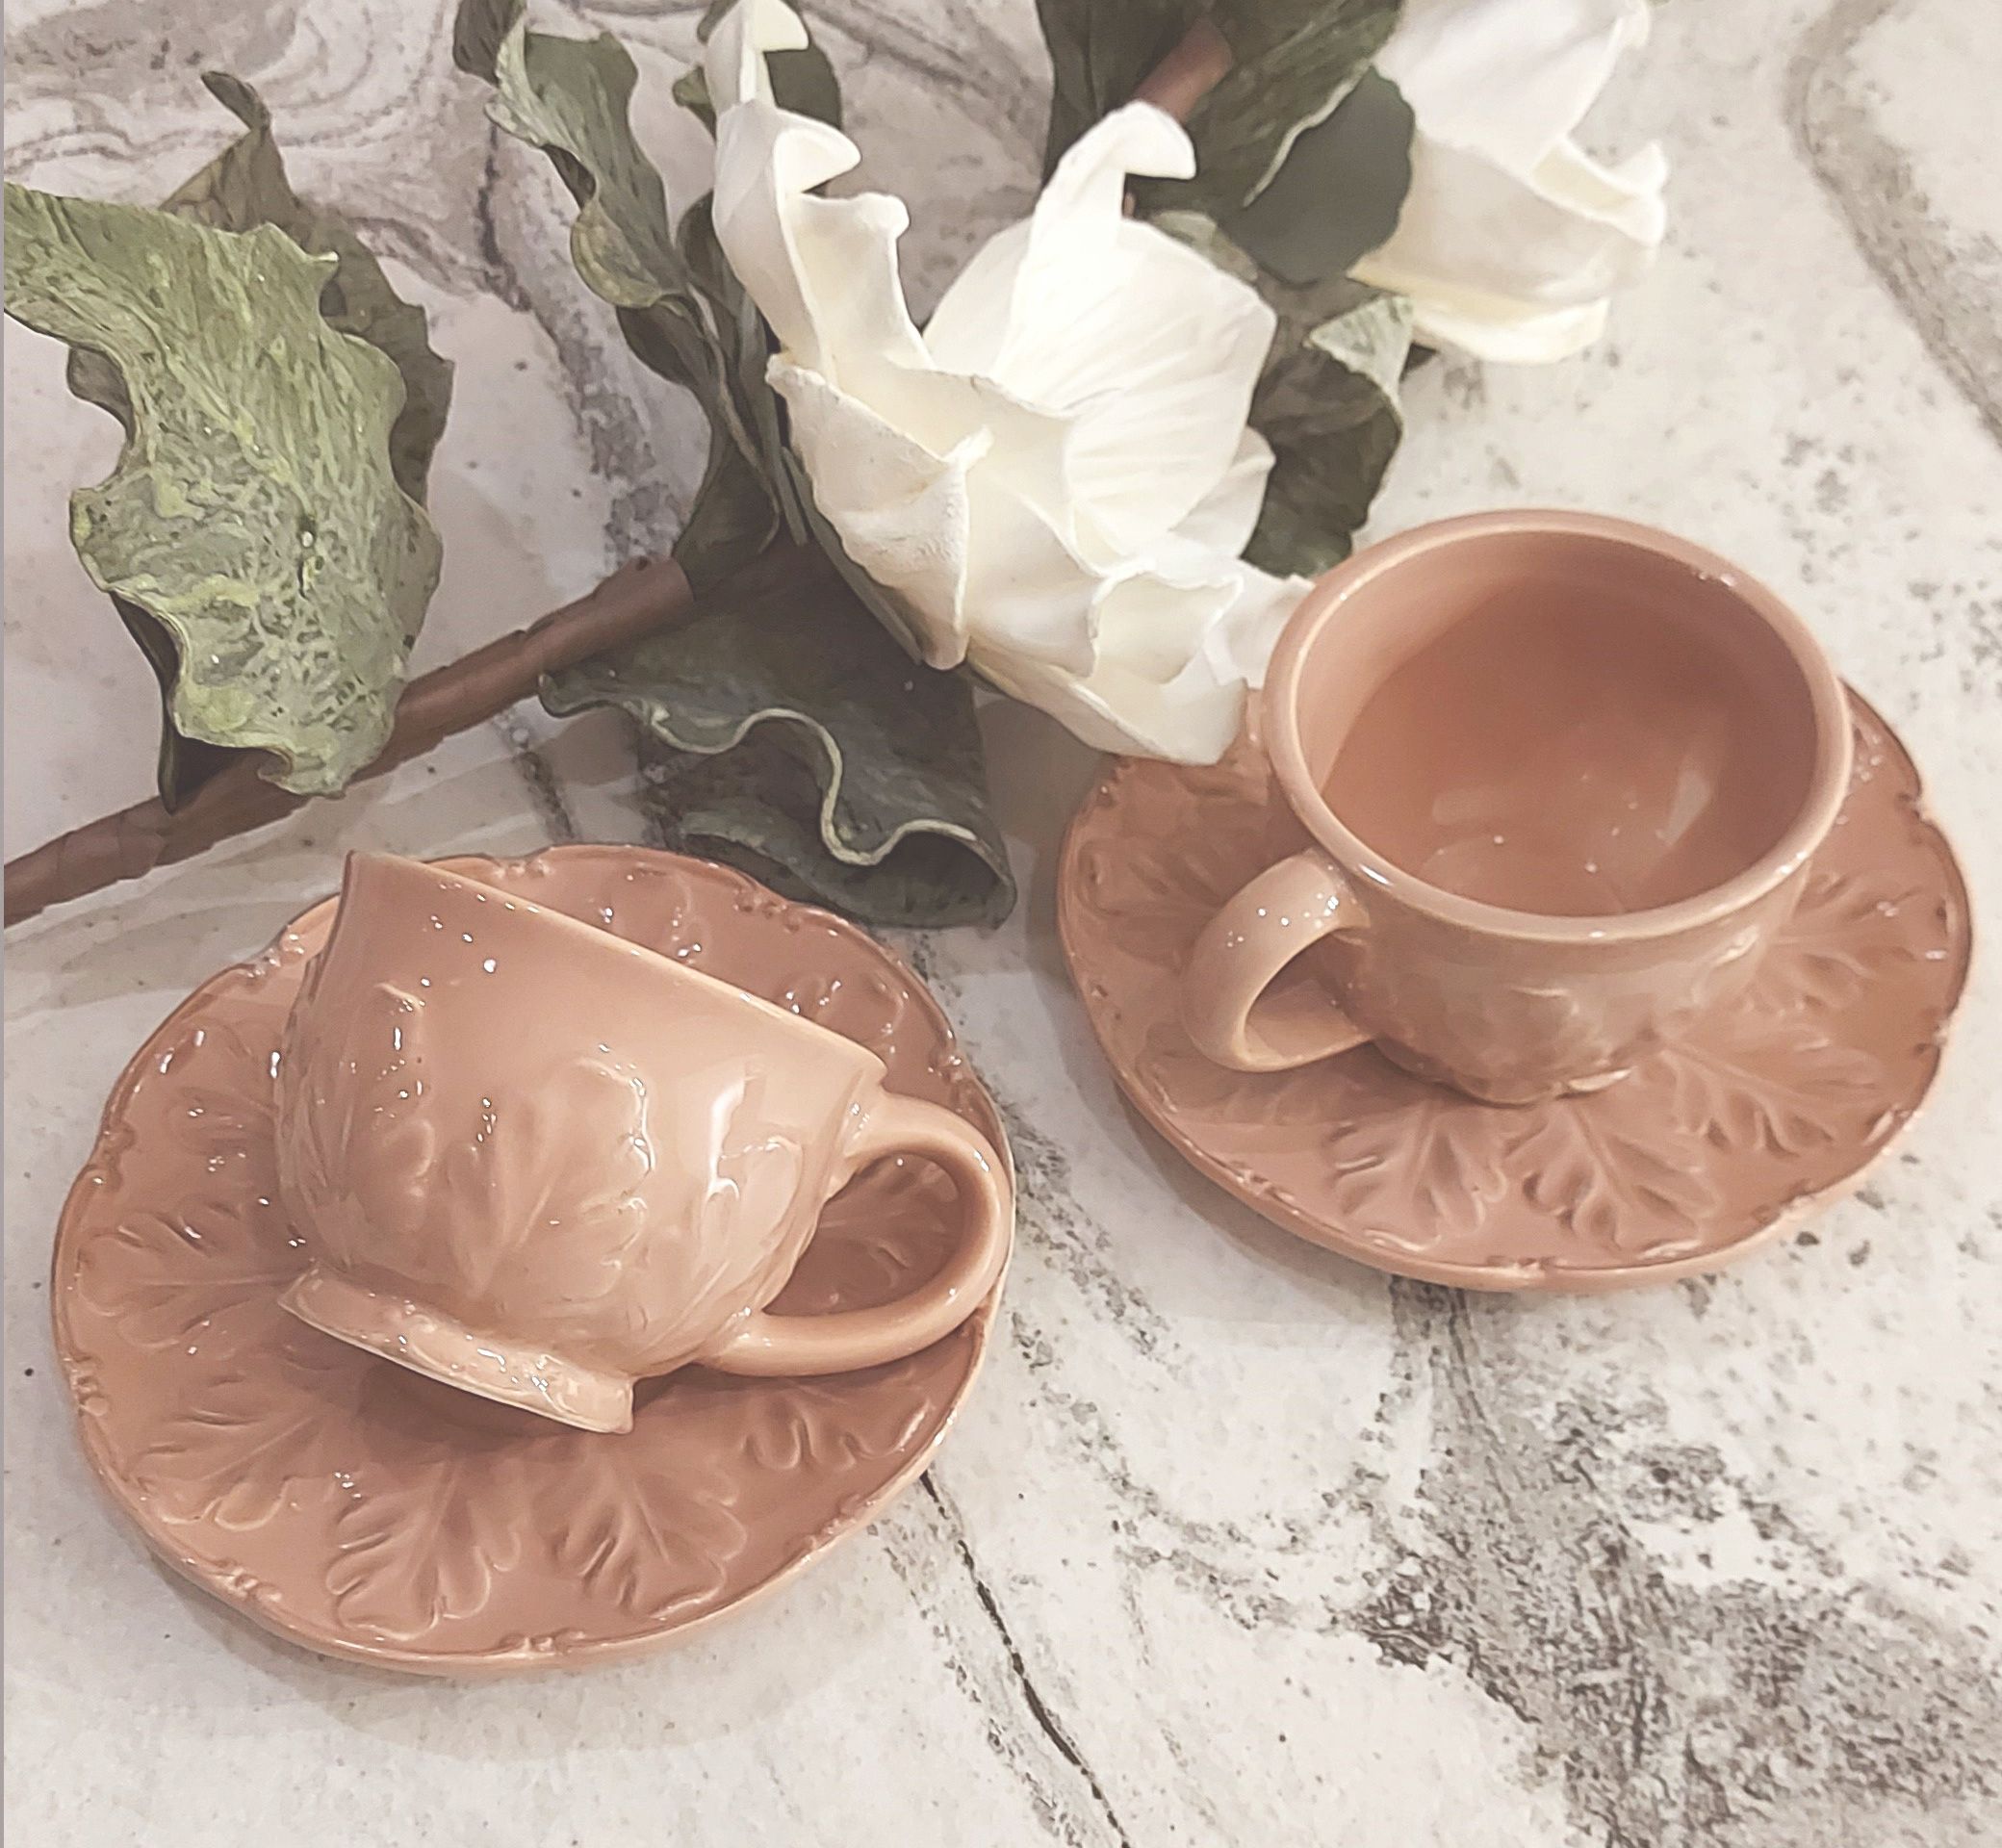 Tazza caffè rosa antico Country Chic in ceramica ROMA 3 Bicchieri - Mug -  Tazze